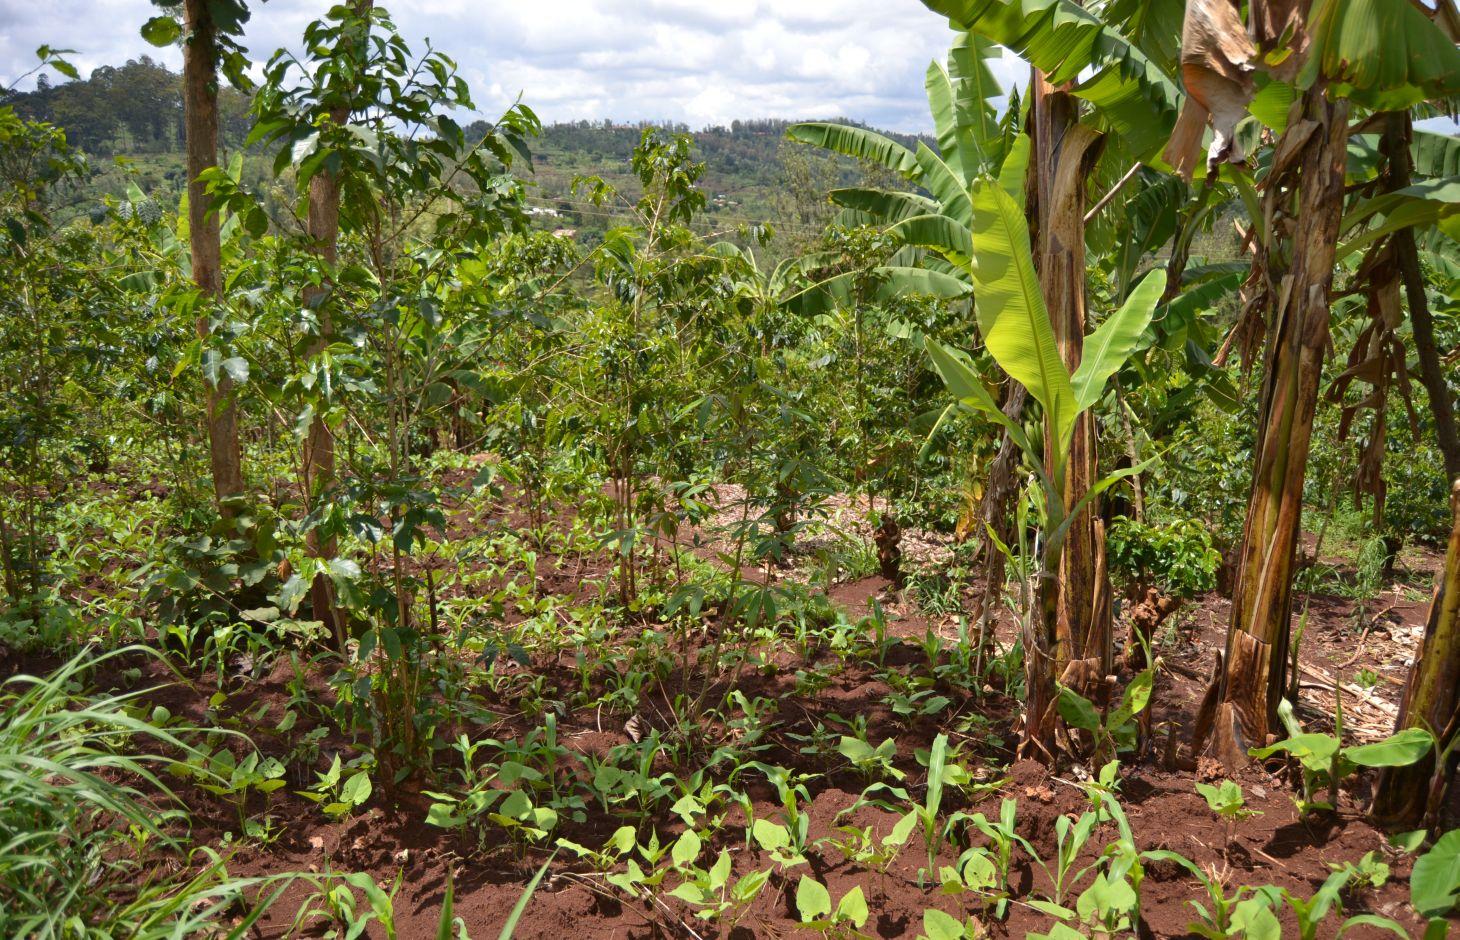 Coffee plantation, maize-beans and Bananas